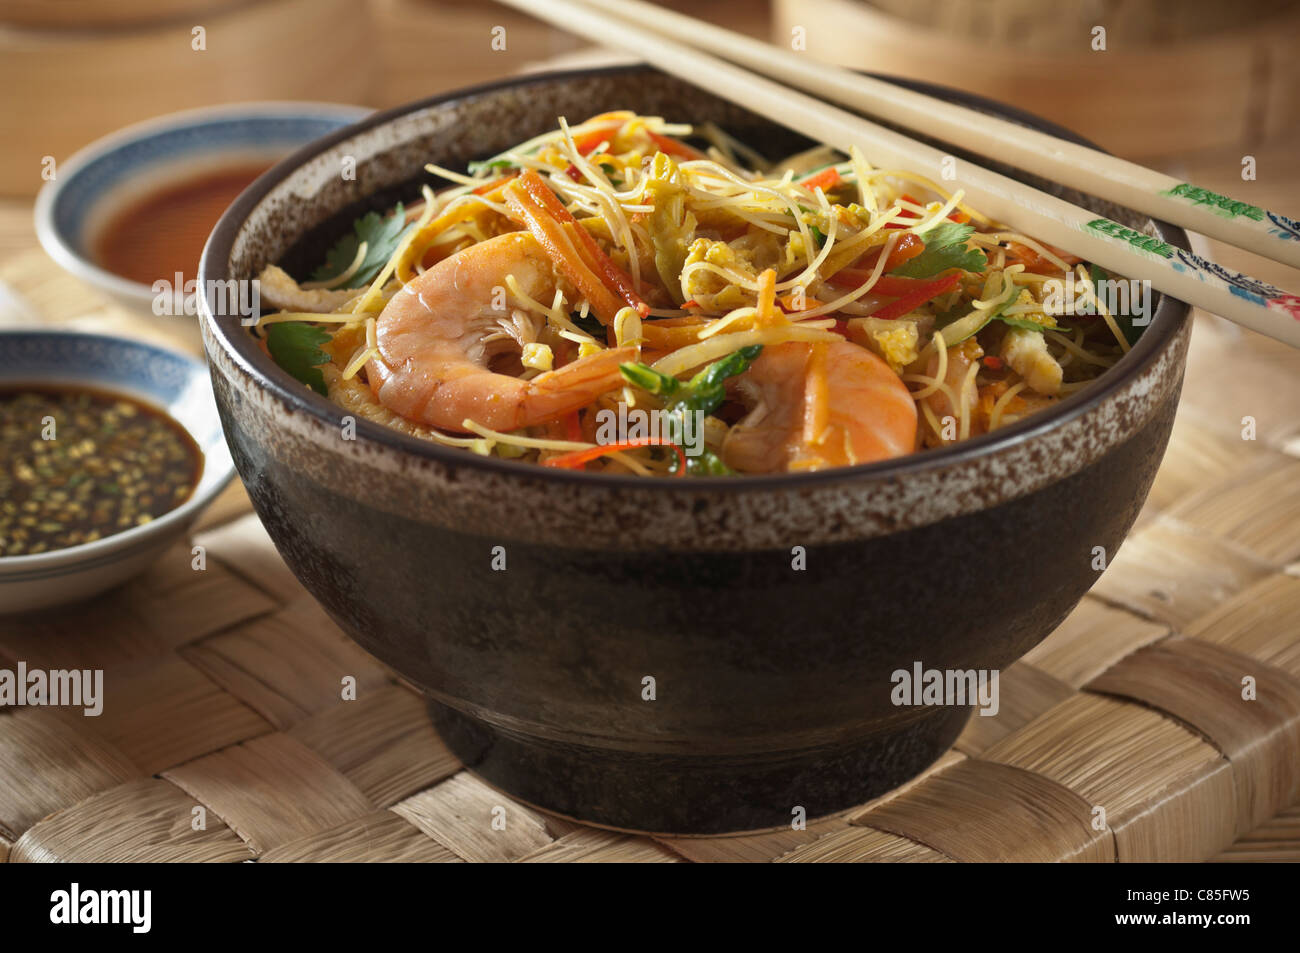 Comida china fotografías e imágenes de alta resolución - Alamy